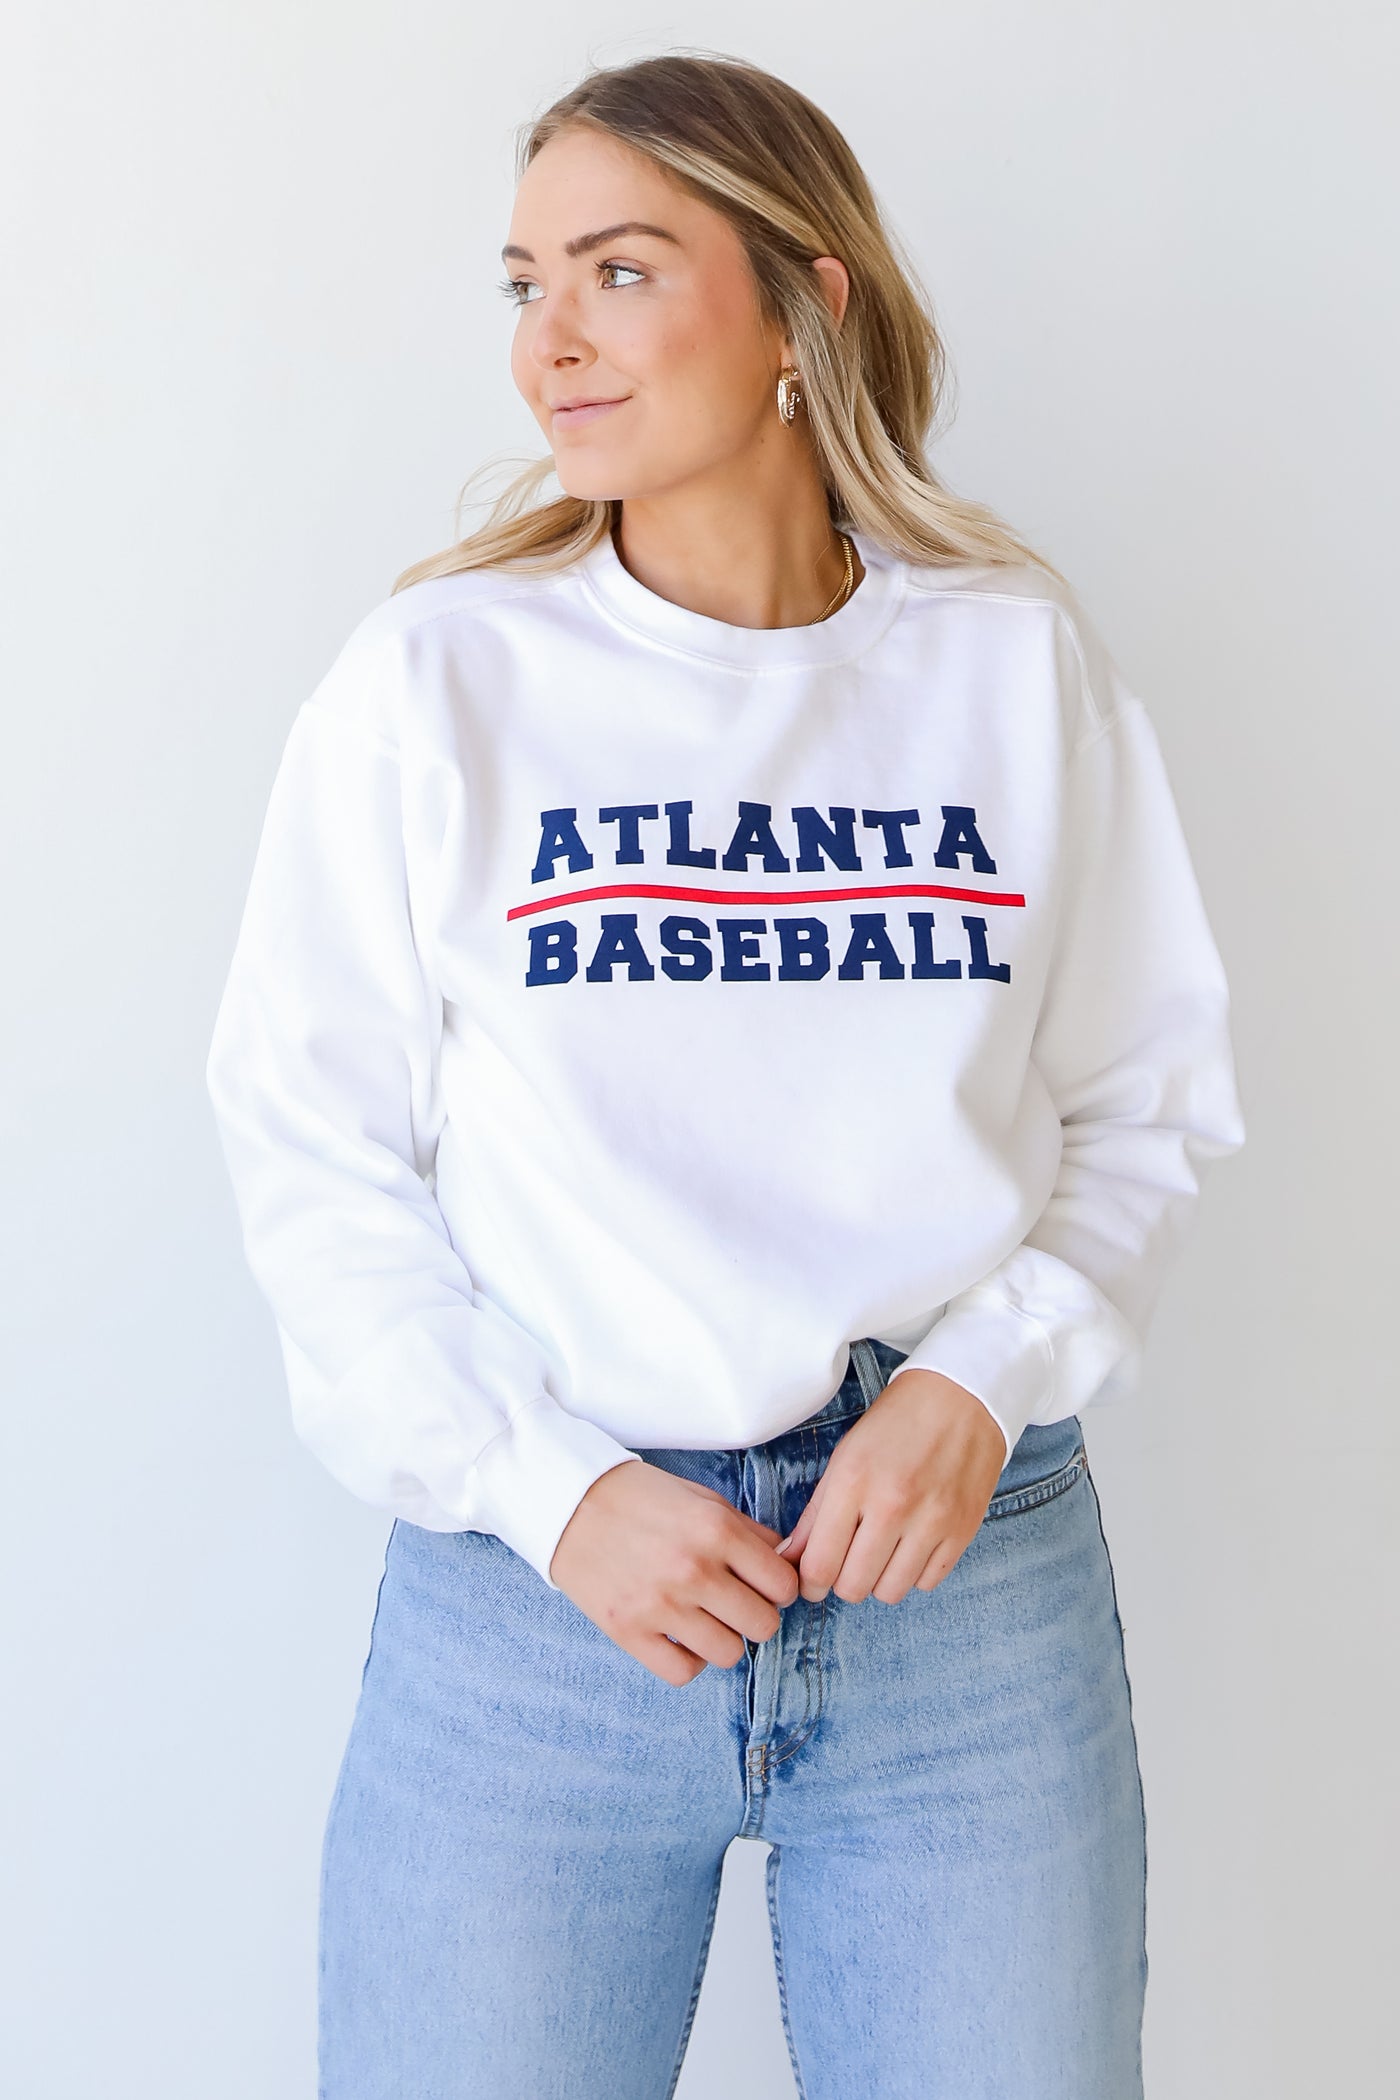 Atlanta Baseball Pullover from dress up